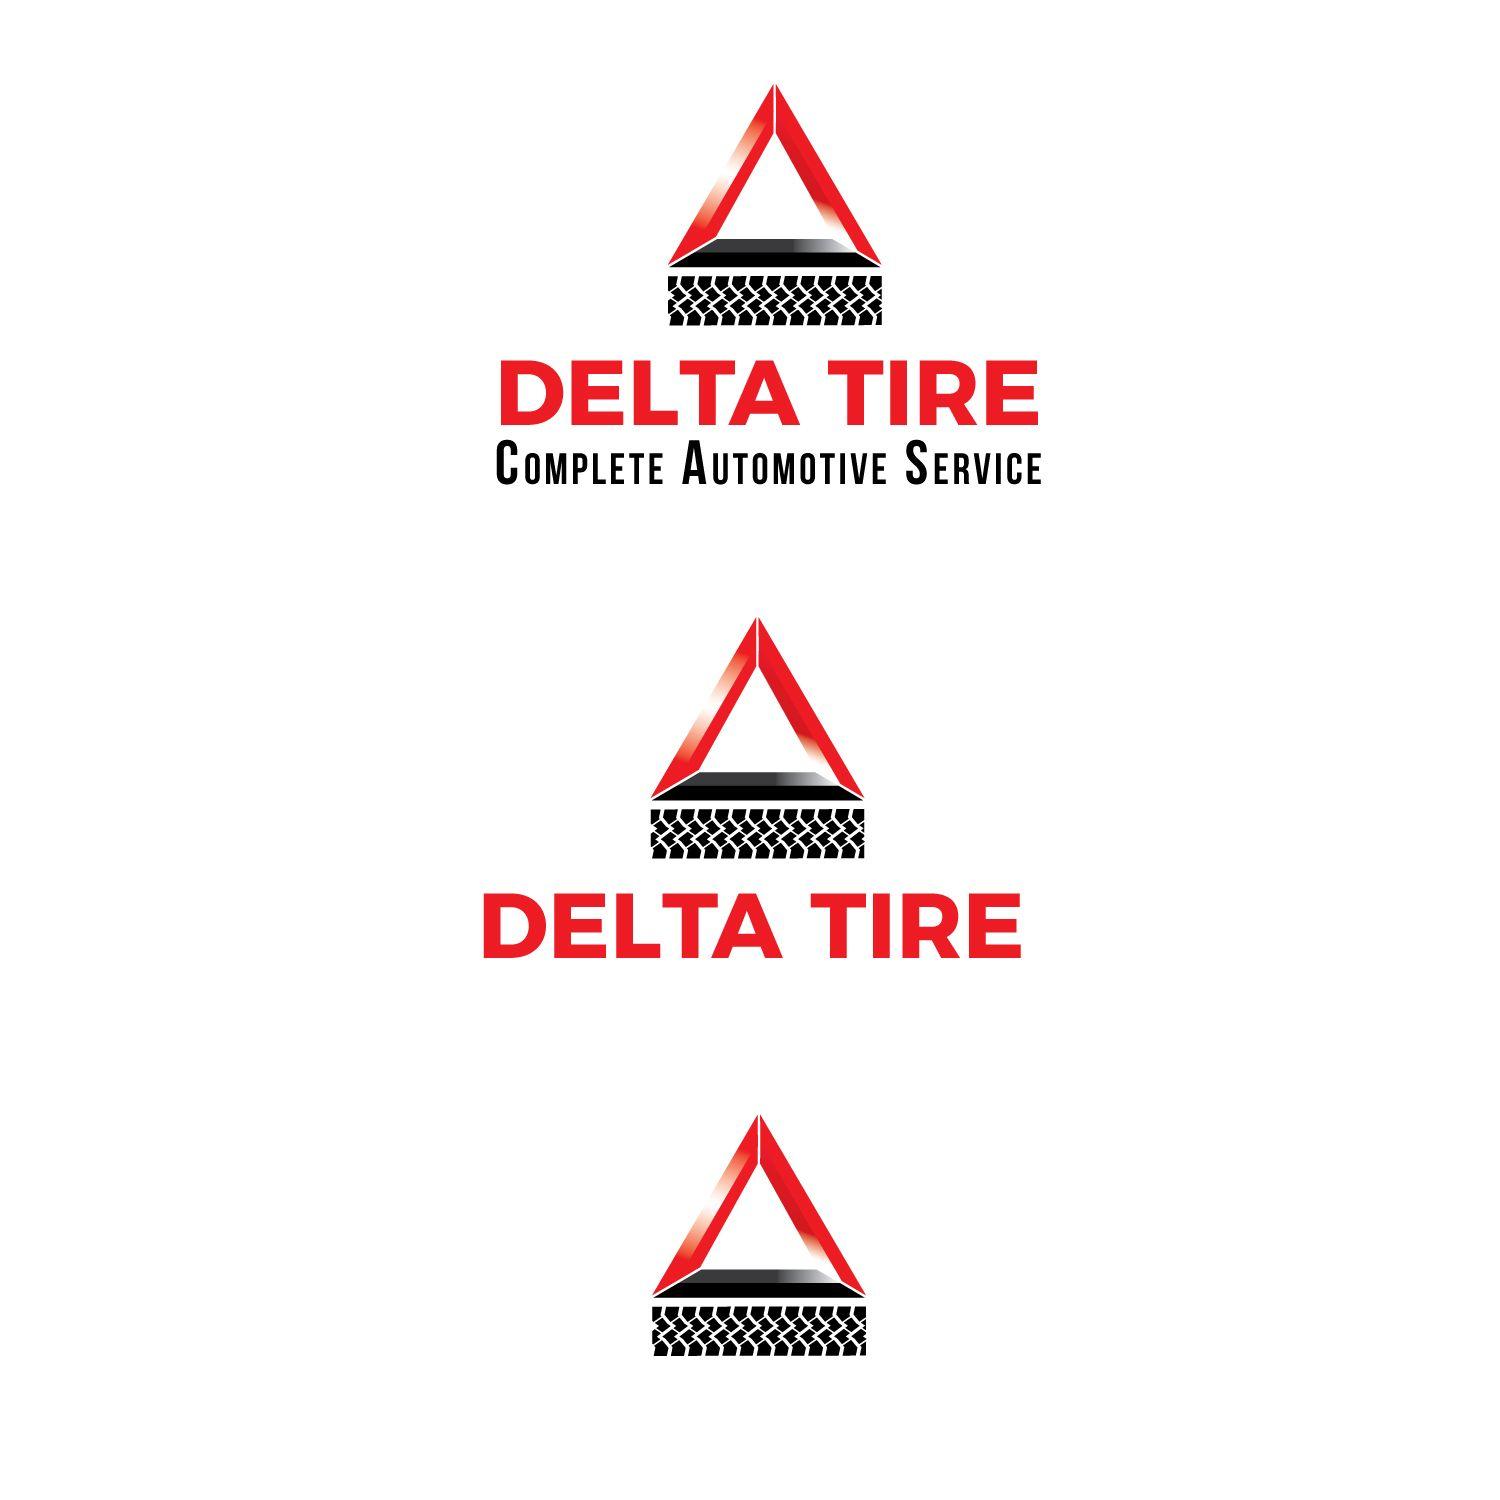 Triangle Automotive Logo - Serious, Modern, Automotive Logo Design for Delta Tire Complete ...